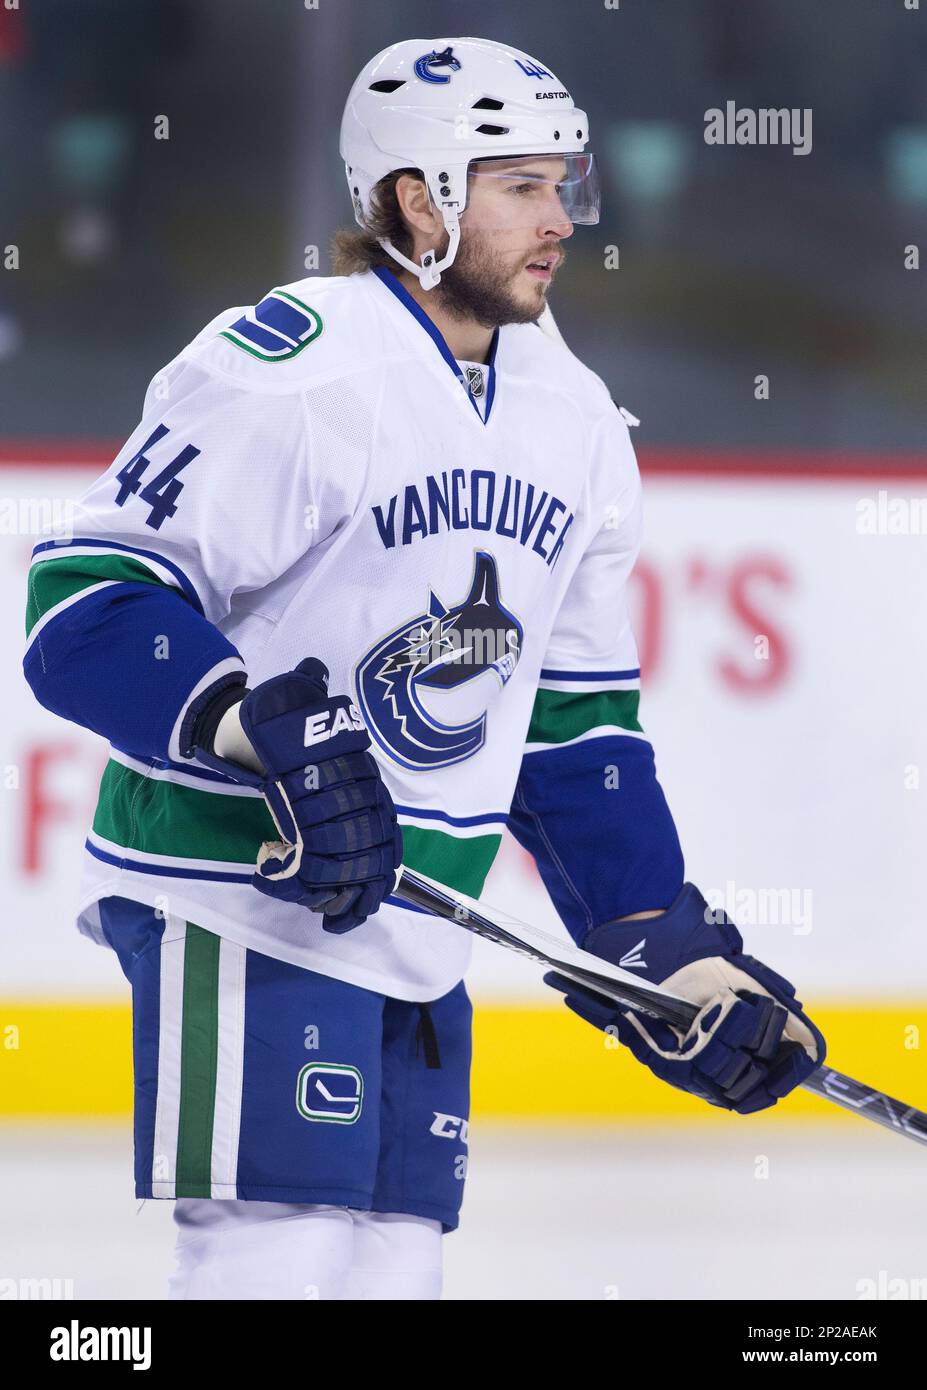 Nhl Profile Photo On Vancouver Canucks Matt Bartkowski During A Game